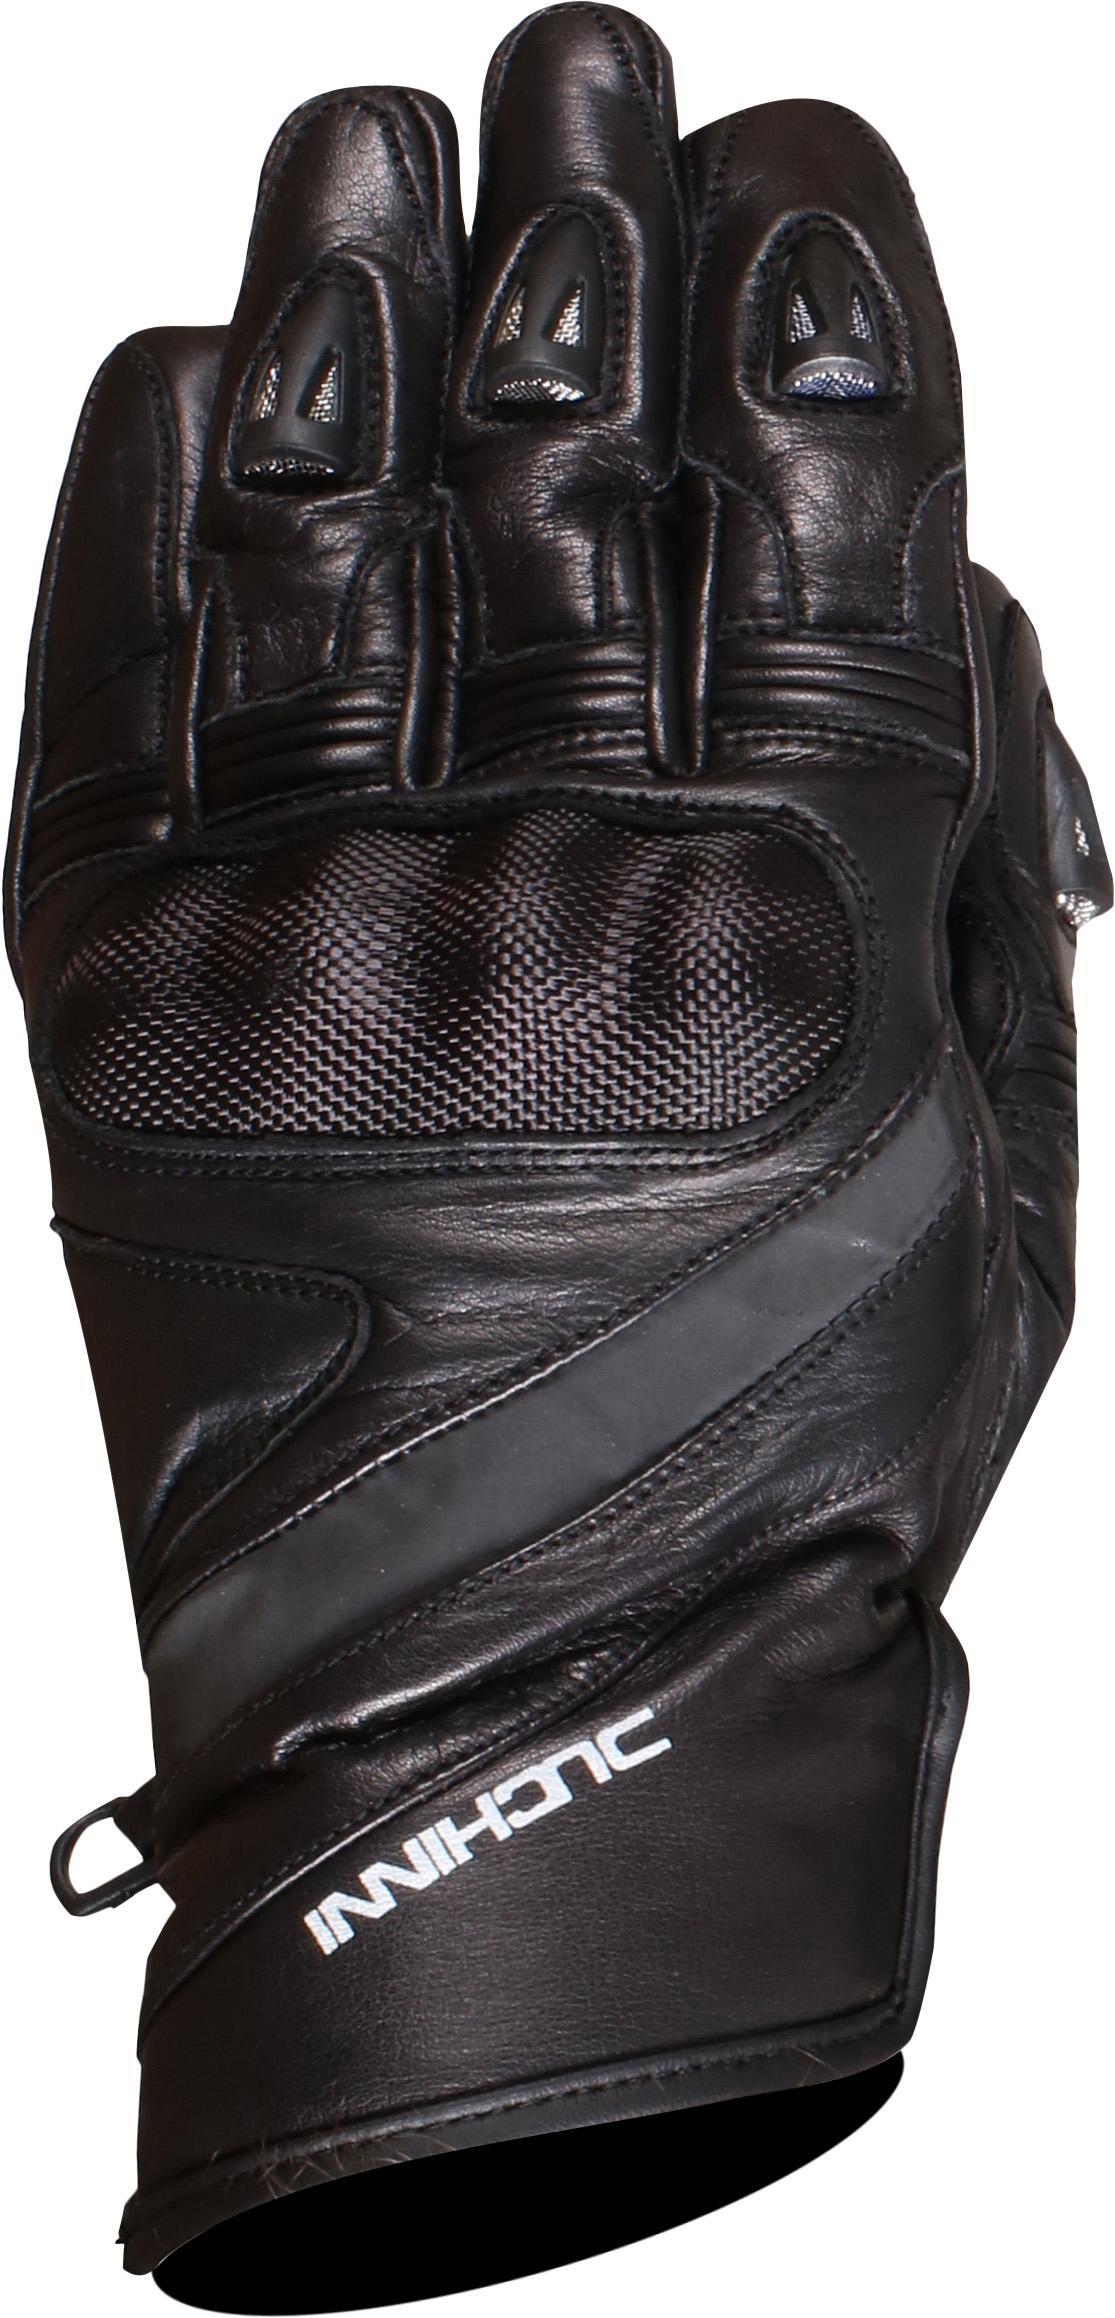 Duchinni Fresco Motorcycle Gloves - Black, 2Xl